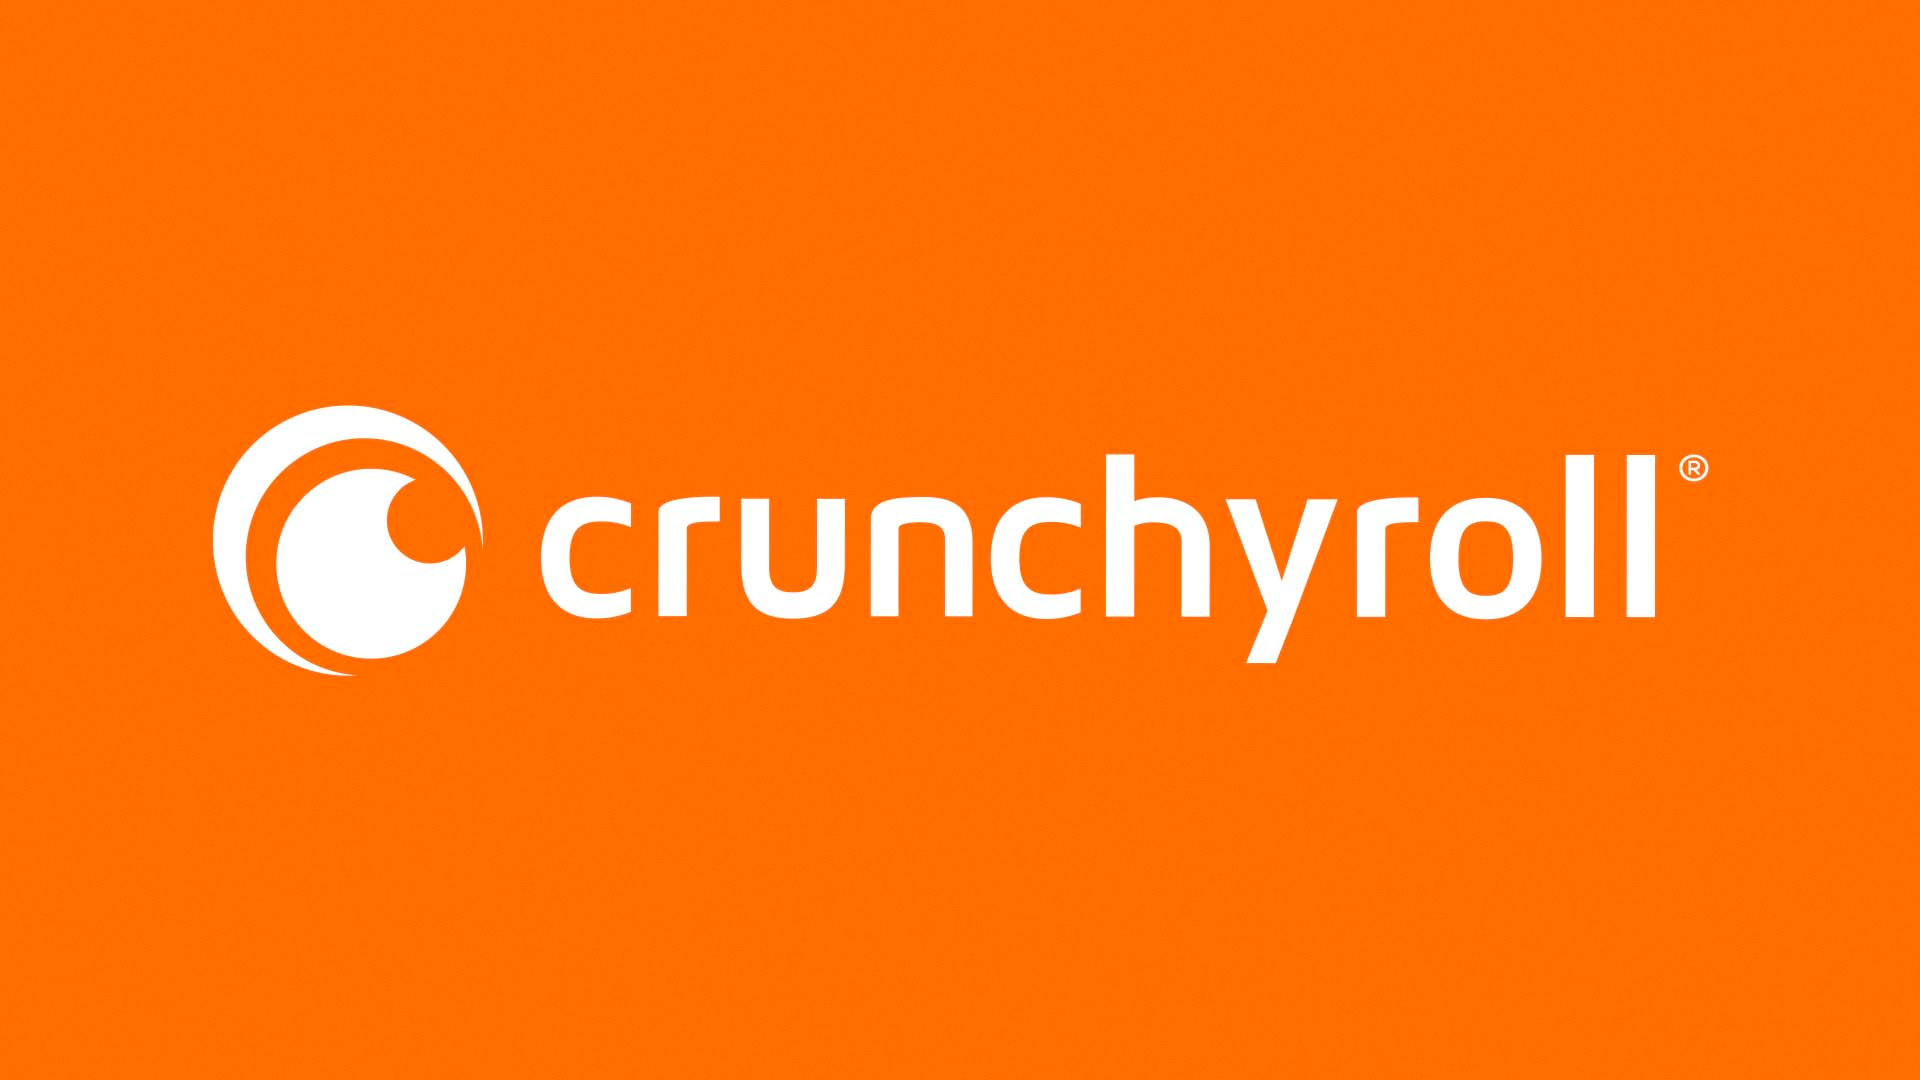 Crunchyroll Watch Party - Watch Crunchyroll Together with Friends Online